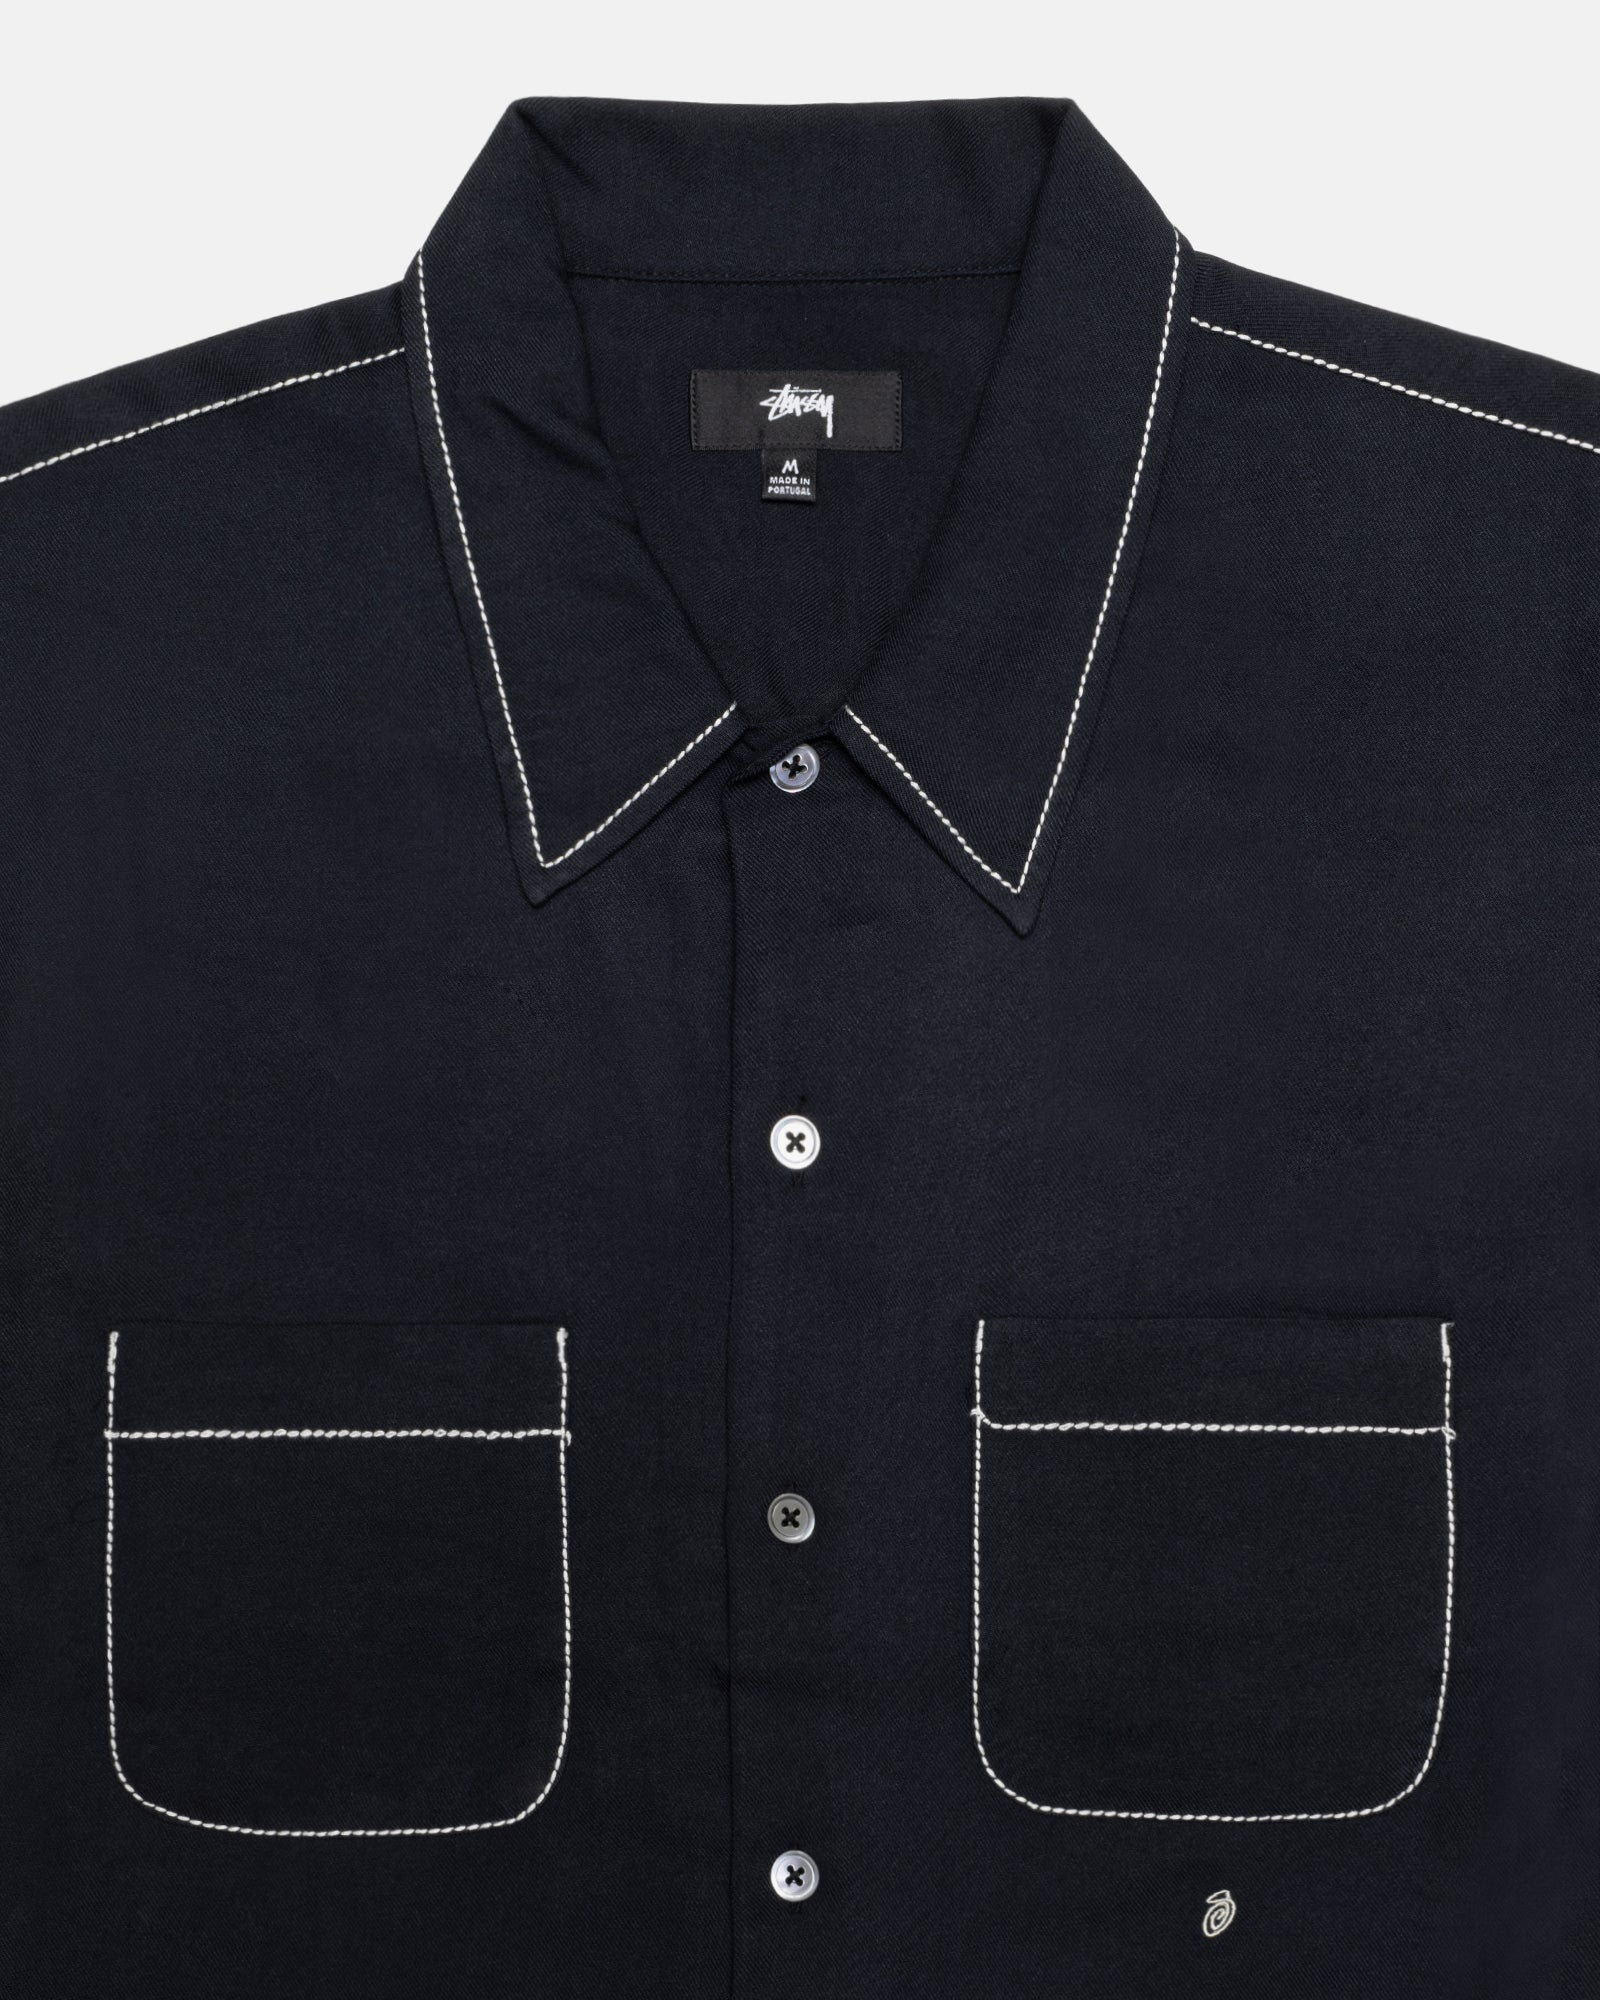 Contrast Pick Stitched Shirt - Unisex Tops & Shirts | Stüssy